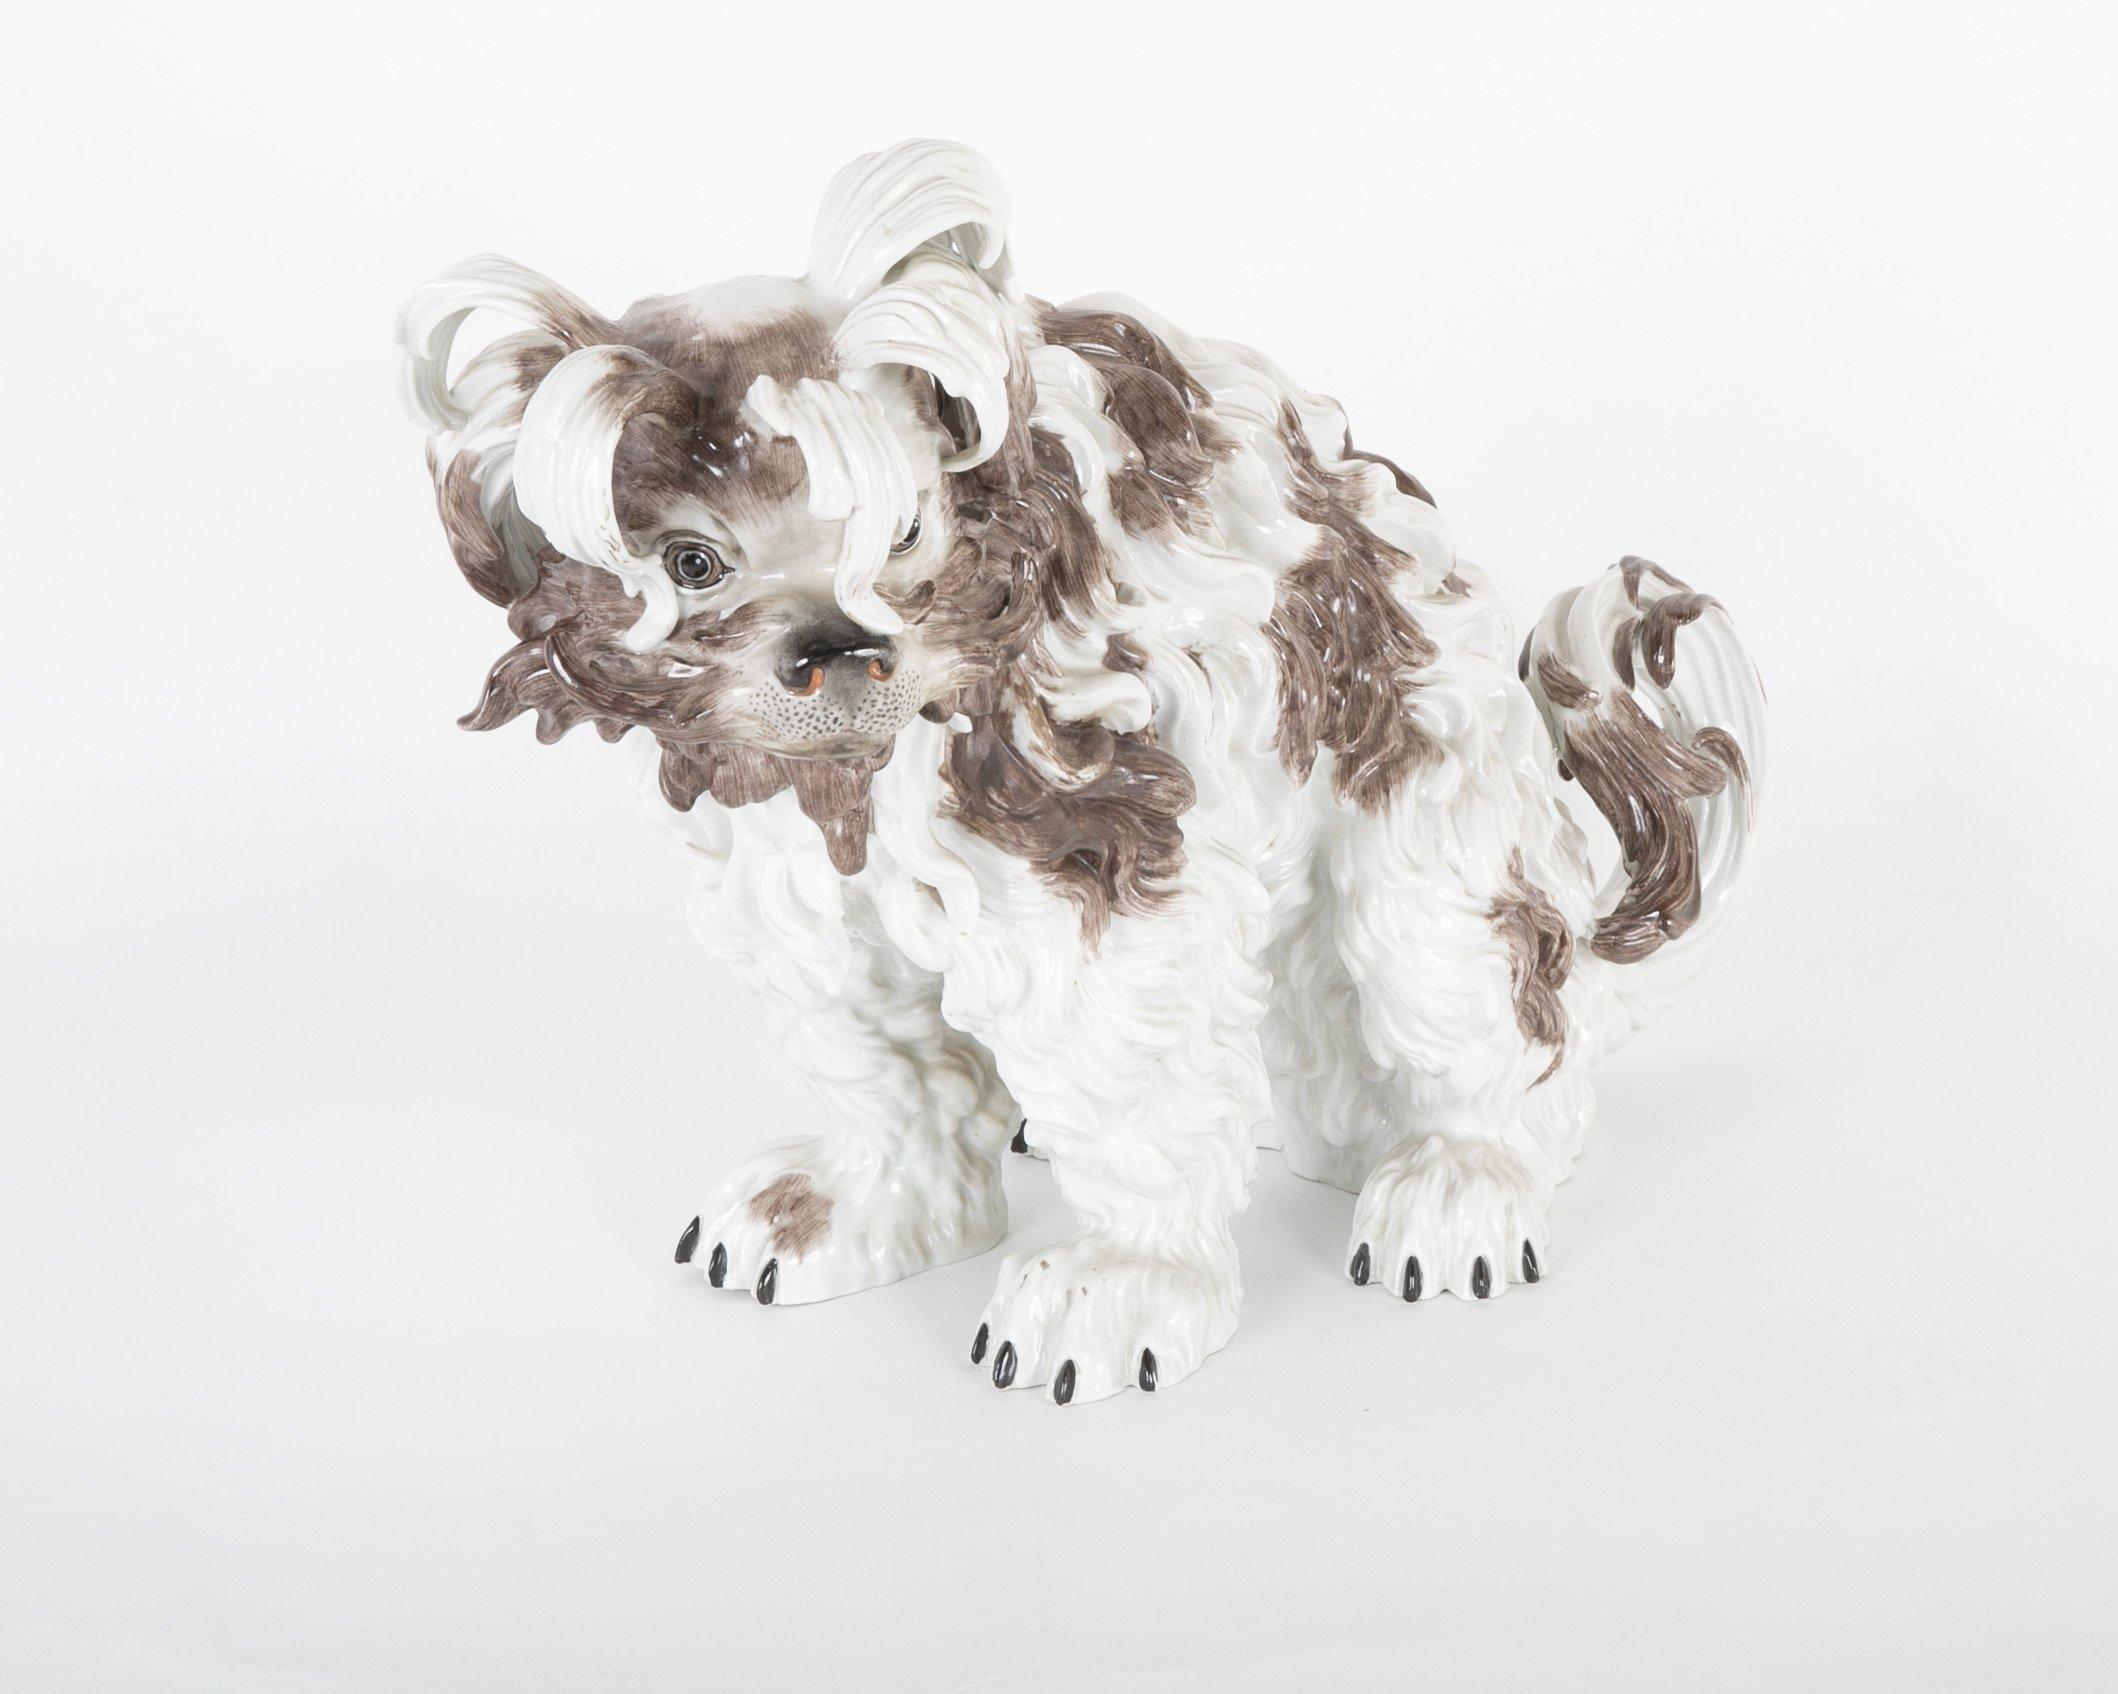 19th century Dresden porcelain figure of a shaggy Terrier.